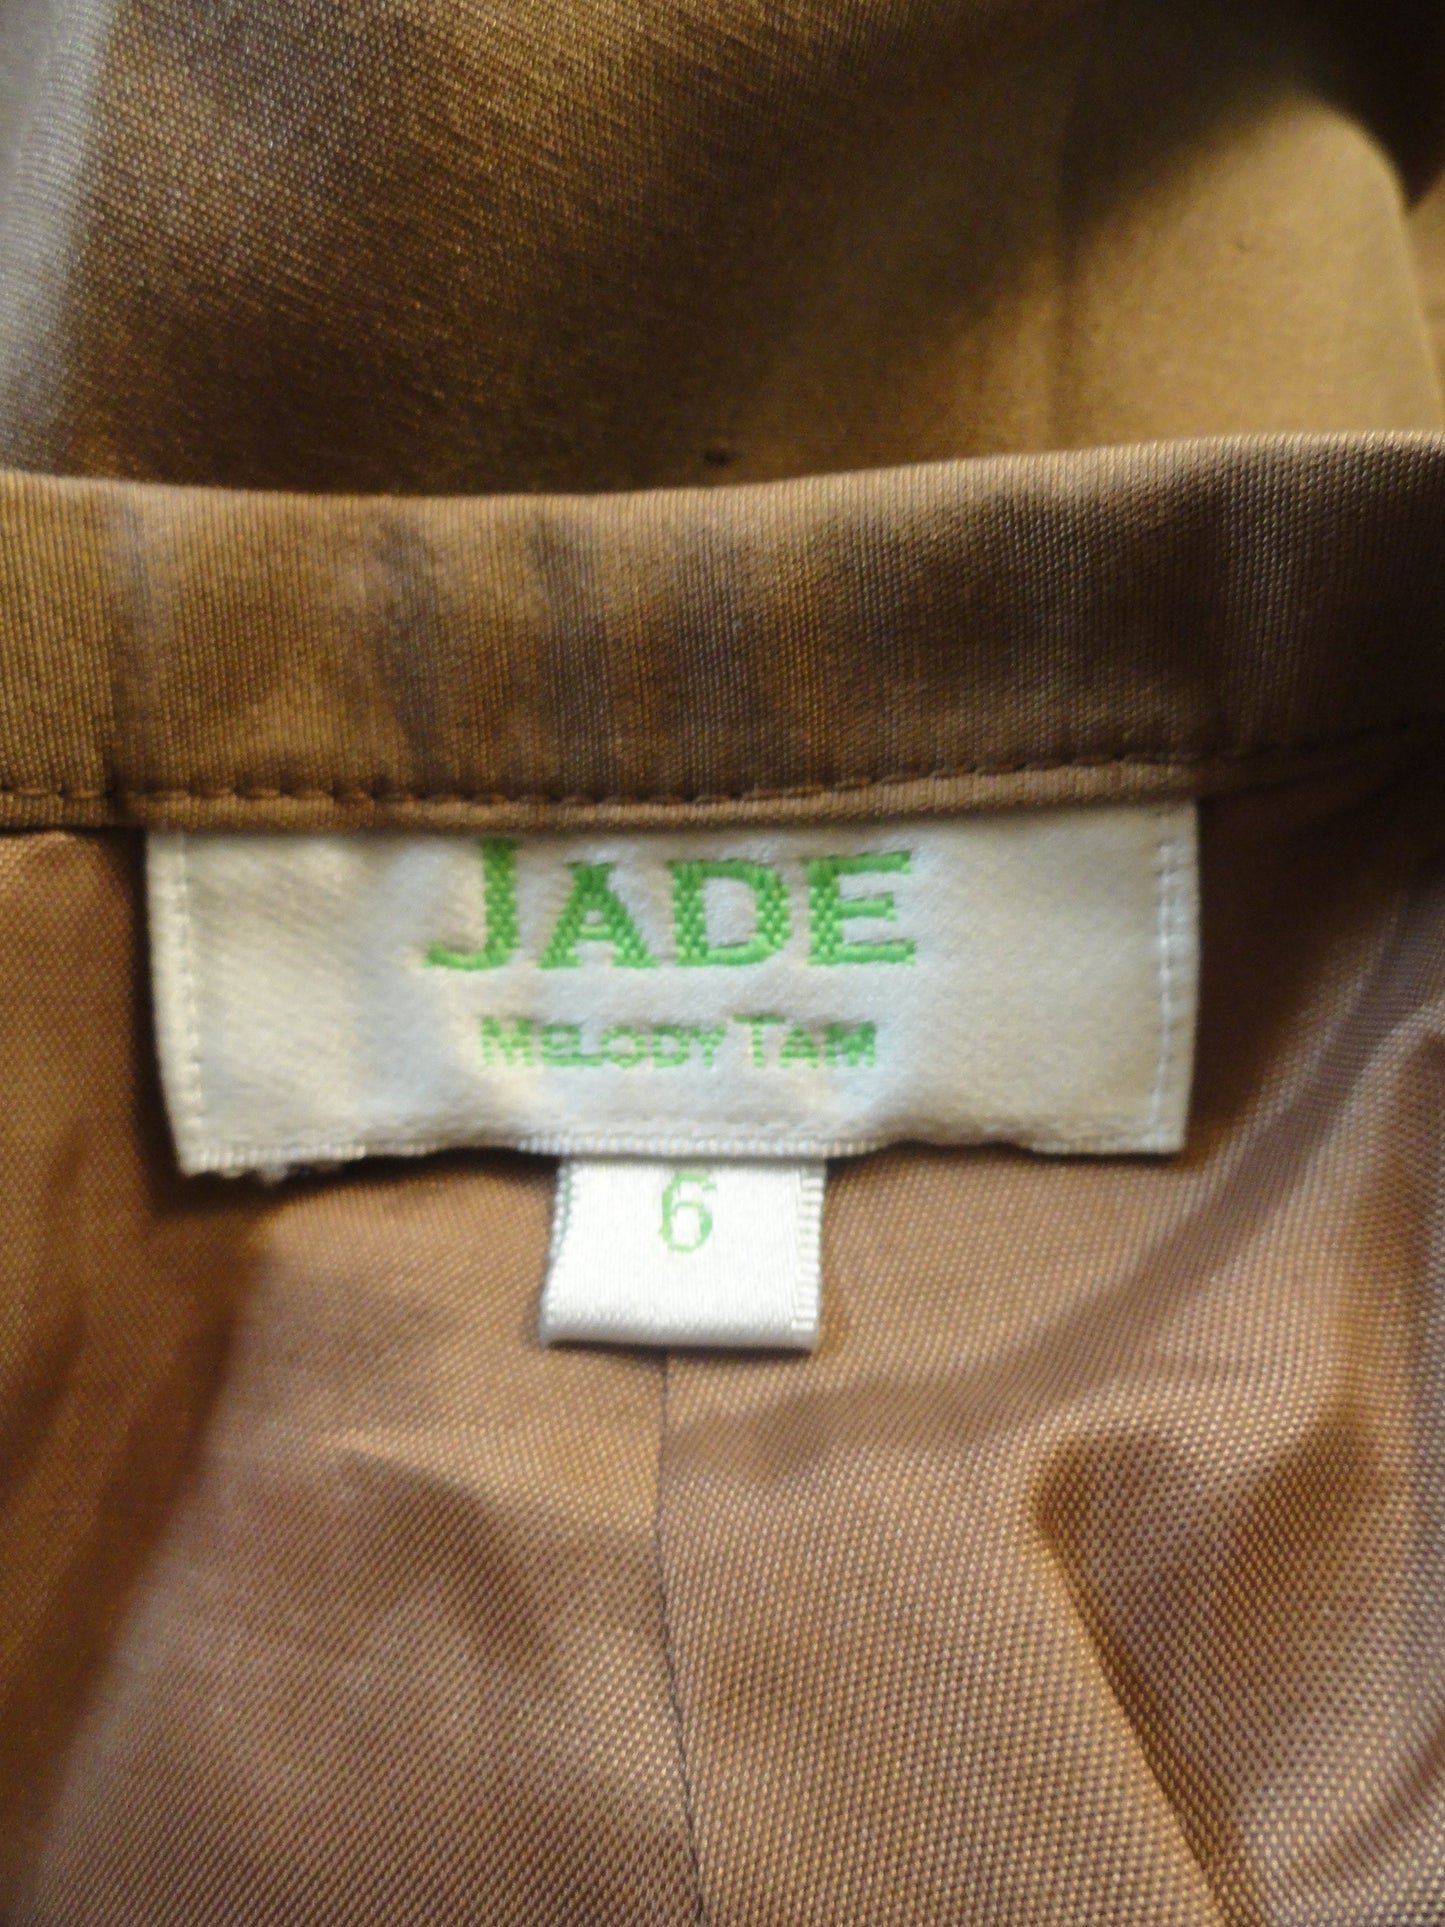 Jade 80's Copper Colored Dress Pants Size 6 SKU 000119